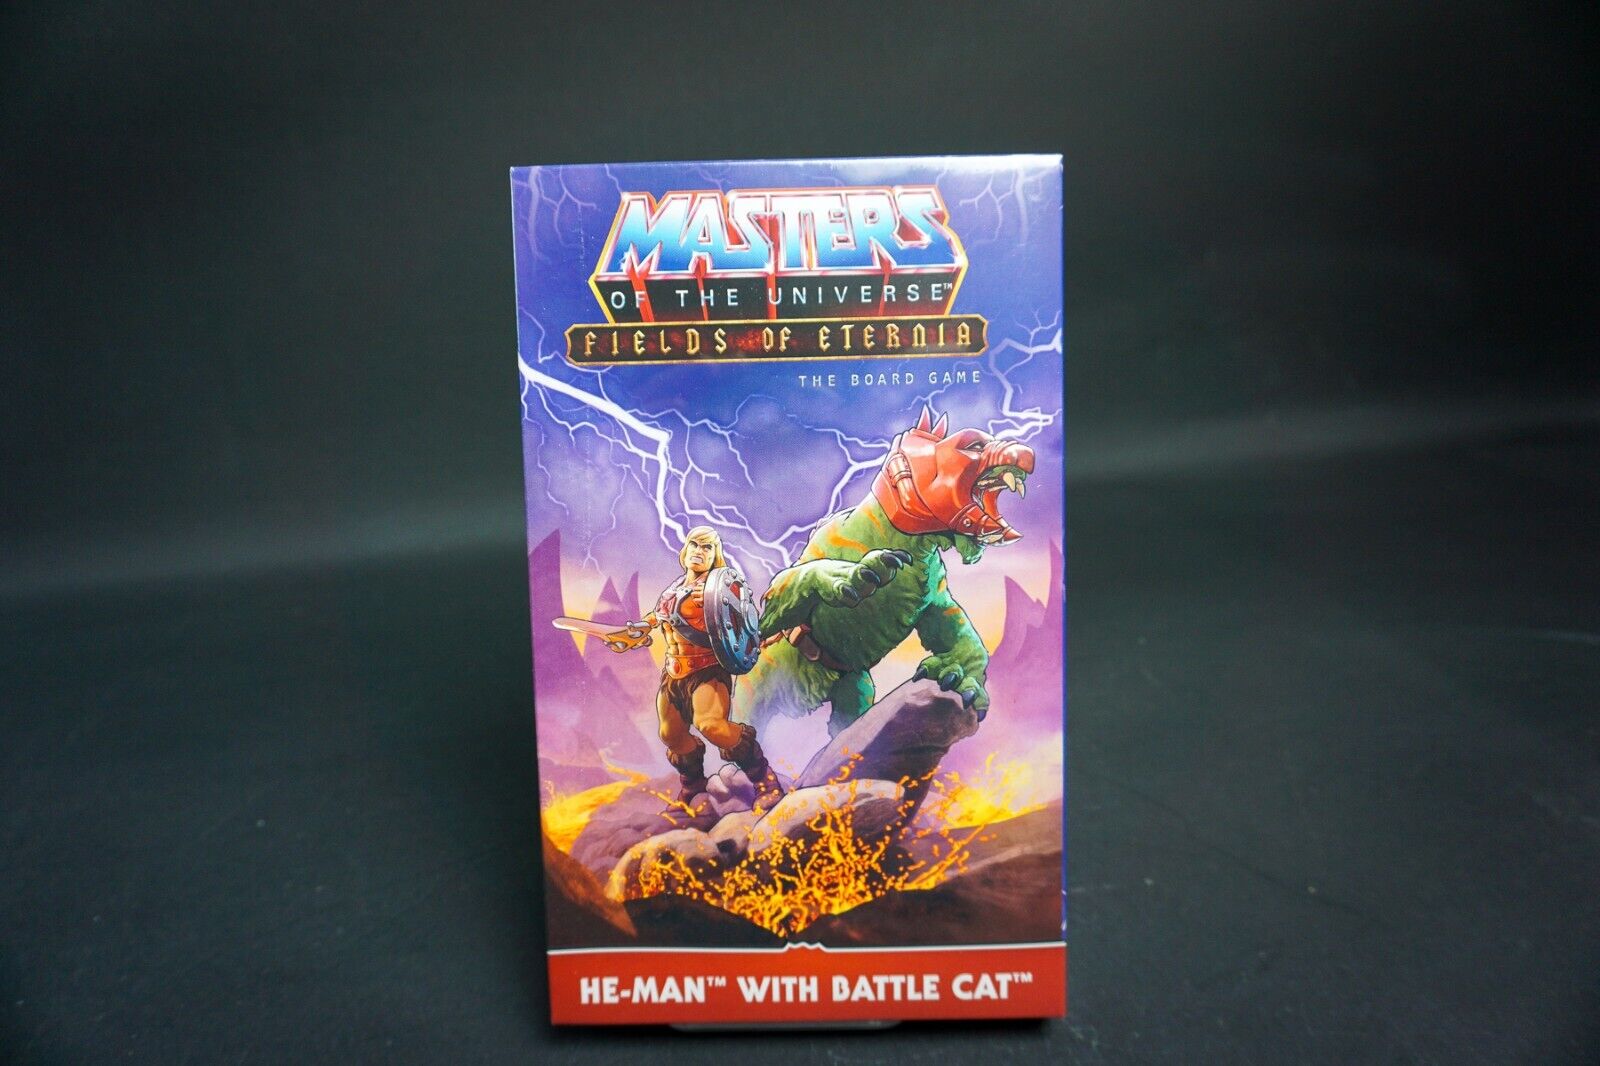 He-Man with Battlecat - Fields of Eternia Archon Studios Exclusive Figure